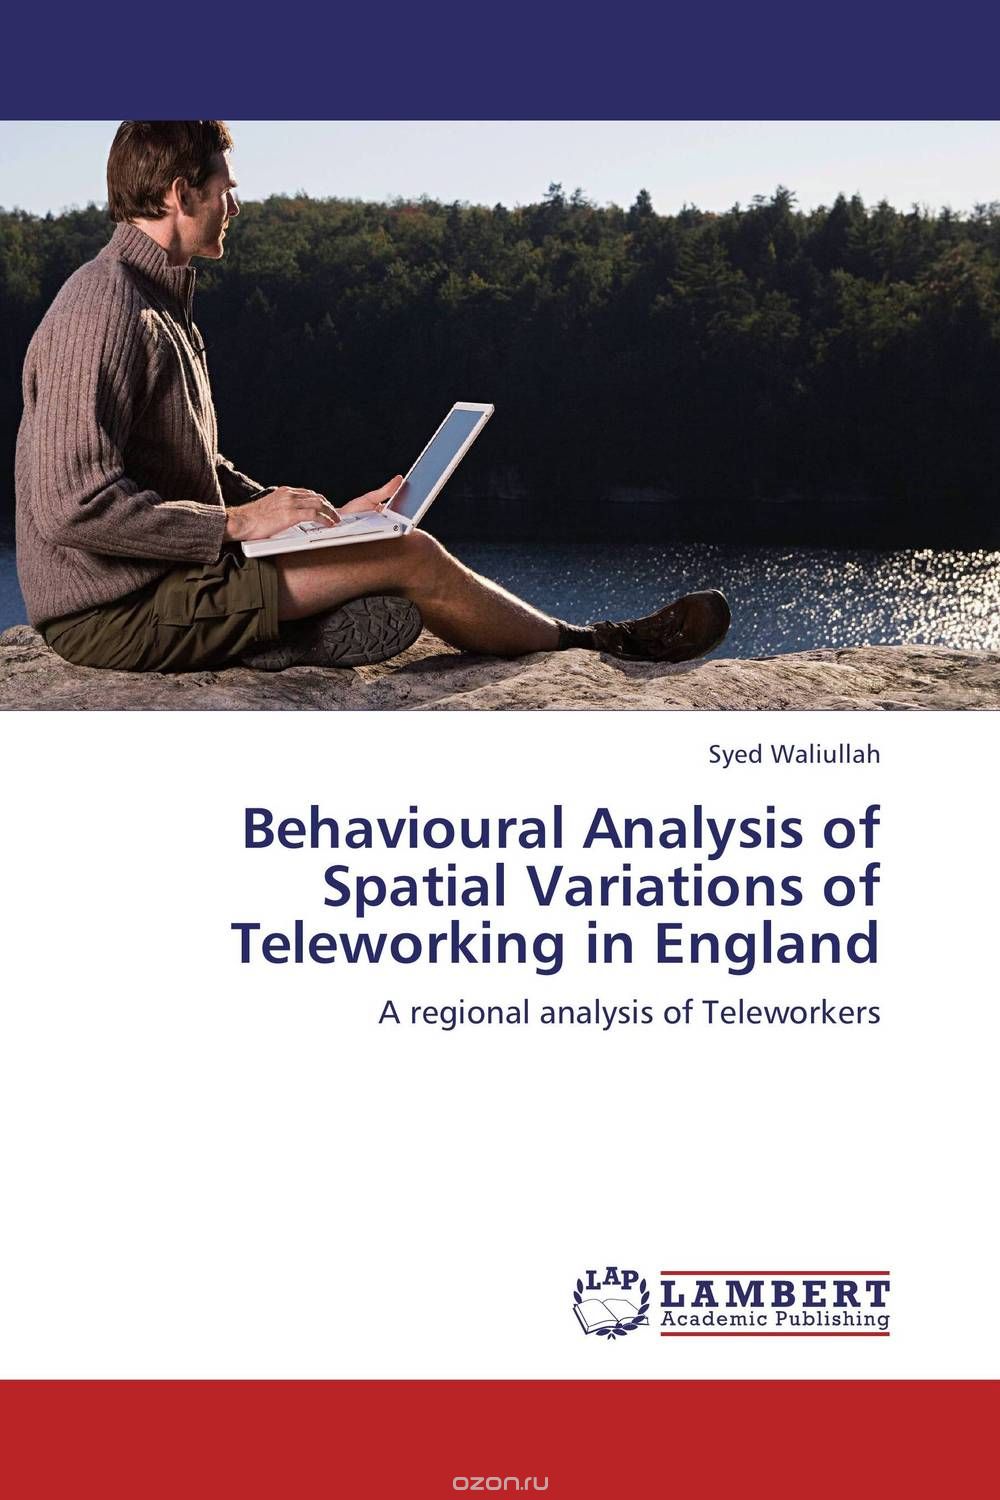 Скачать книгу "Behavioural Analysis of Spatial Variations of Teleworking in England"